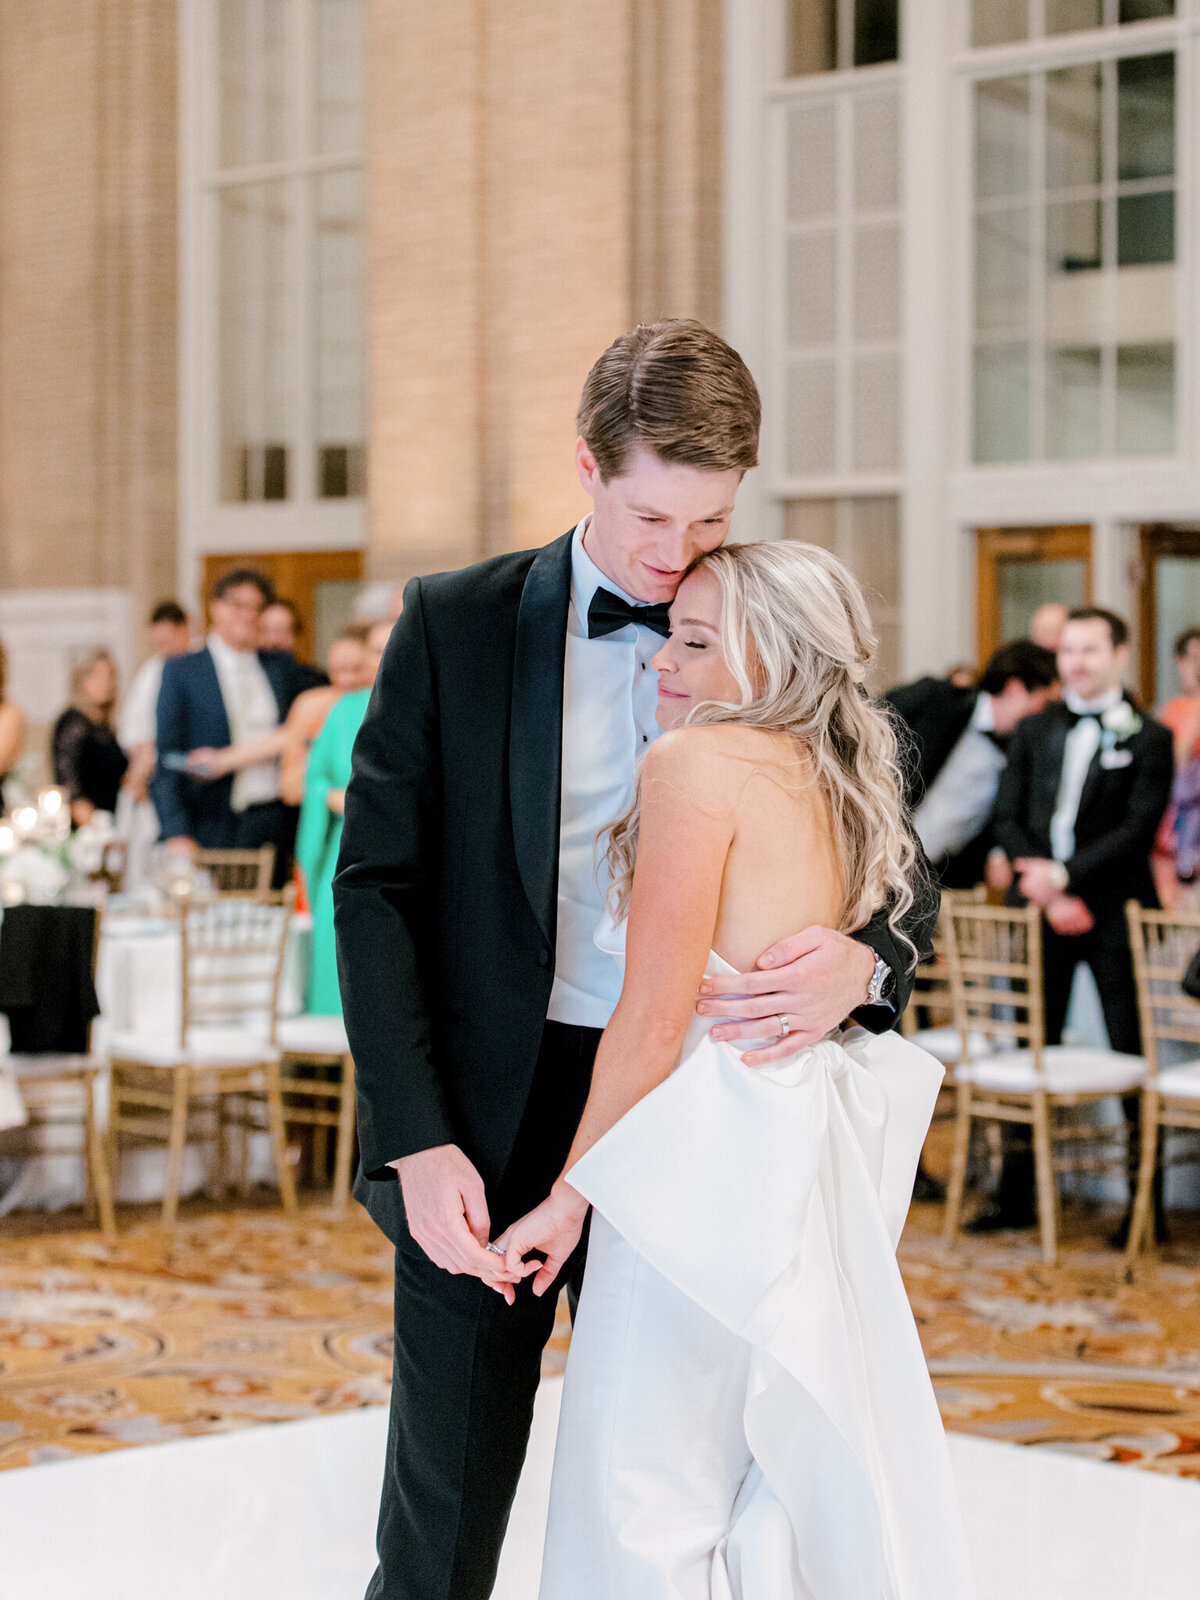 Madison & Michael's Wedding at Union Station | Dallas Wedding Photographer | Sami Kathryn Photography-194